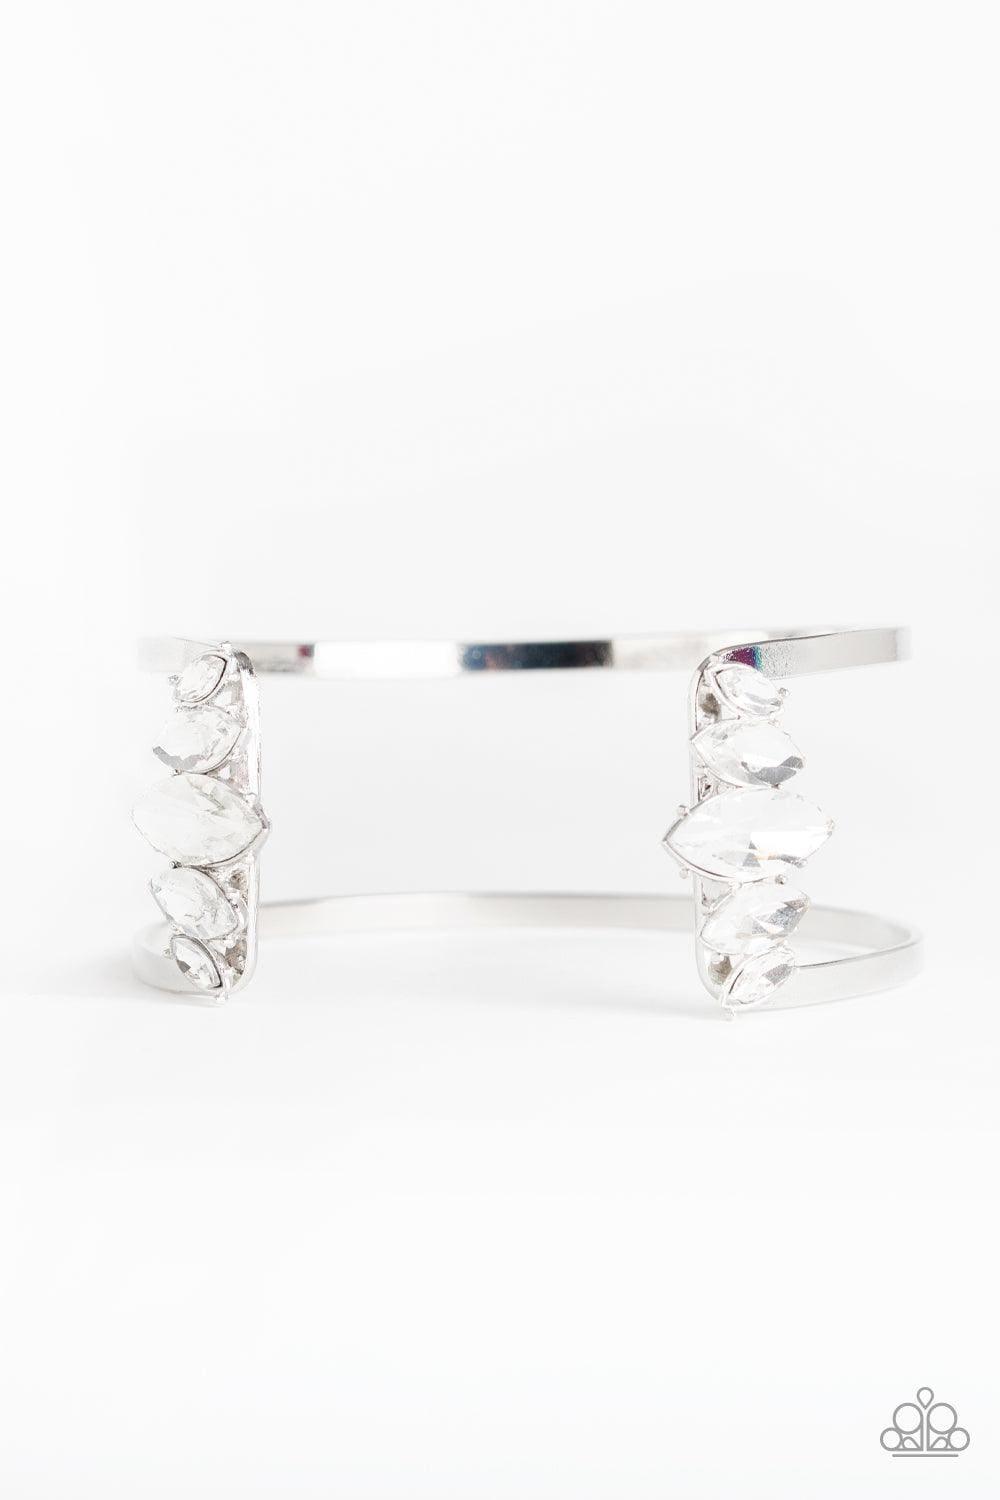 Paparazzi Accessories - Glam Power - White Bracelet - Bling by JessieK